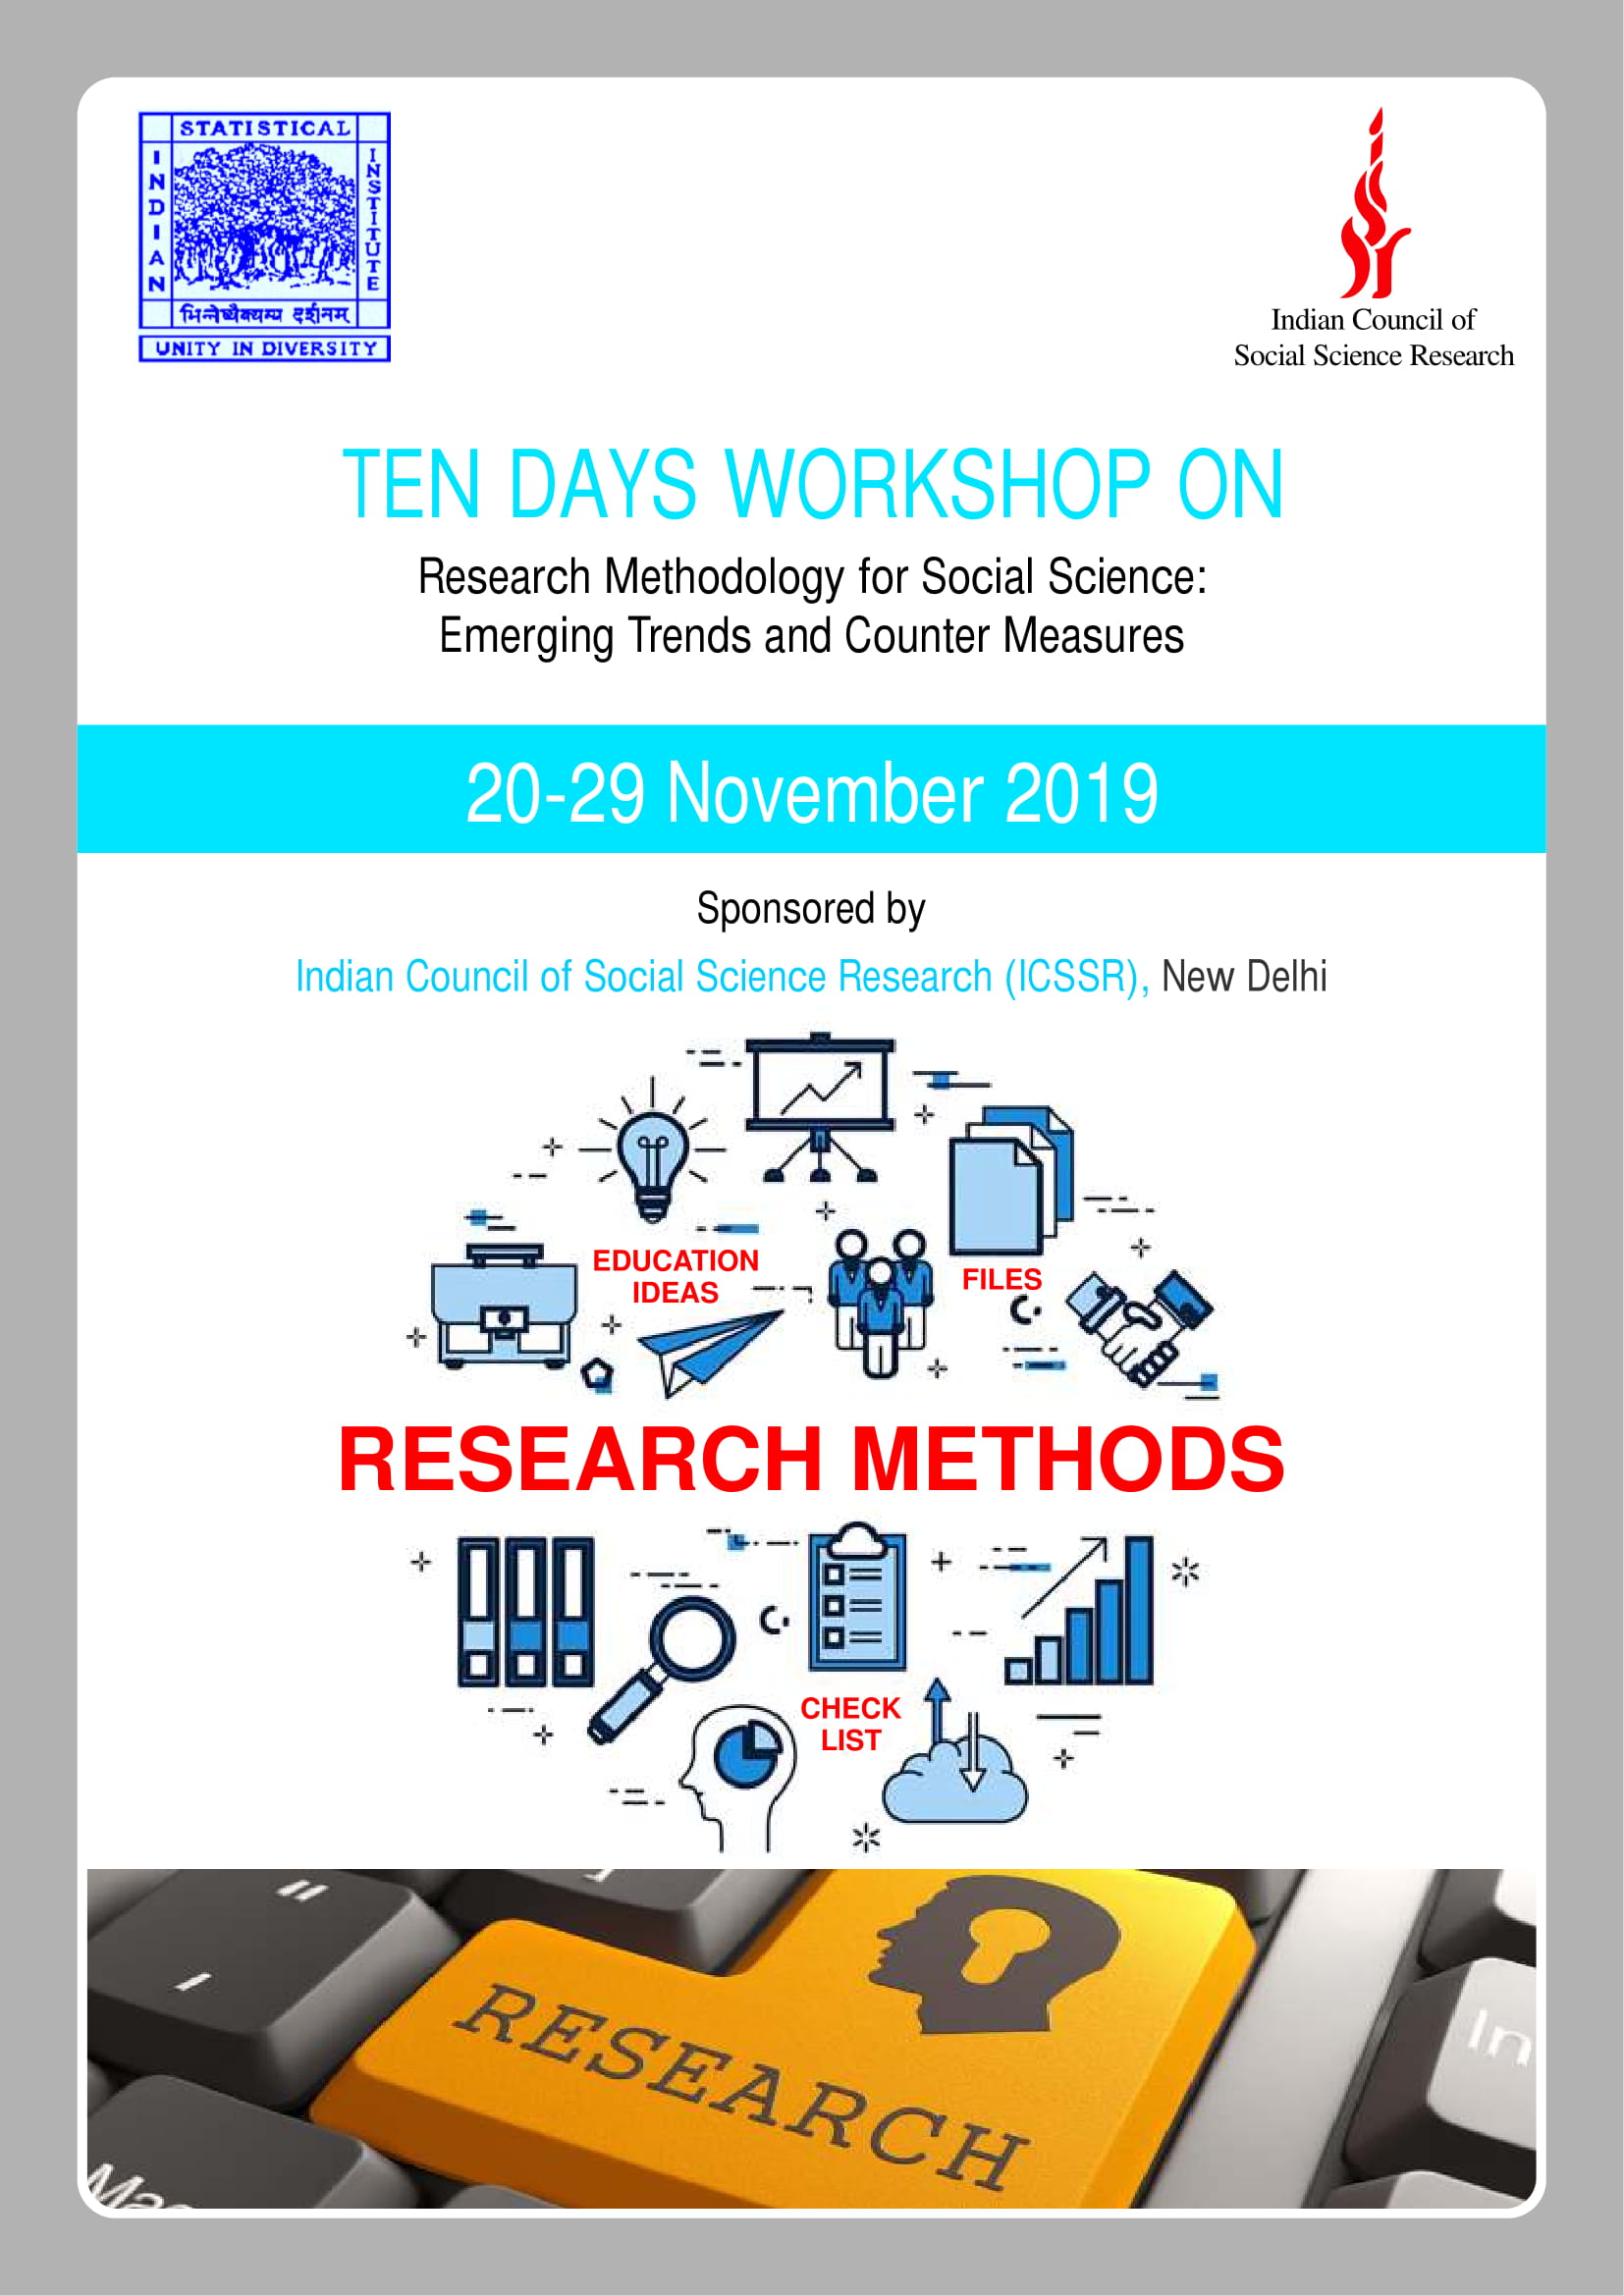 DRTC-MK-Ten_Days_Workshop_on_Research_Methodology-1.jpg